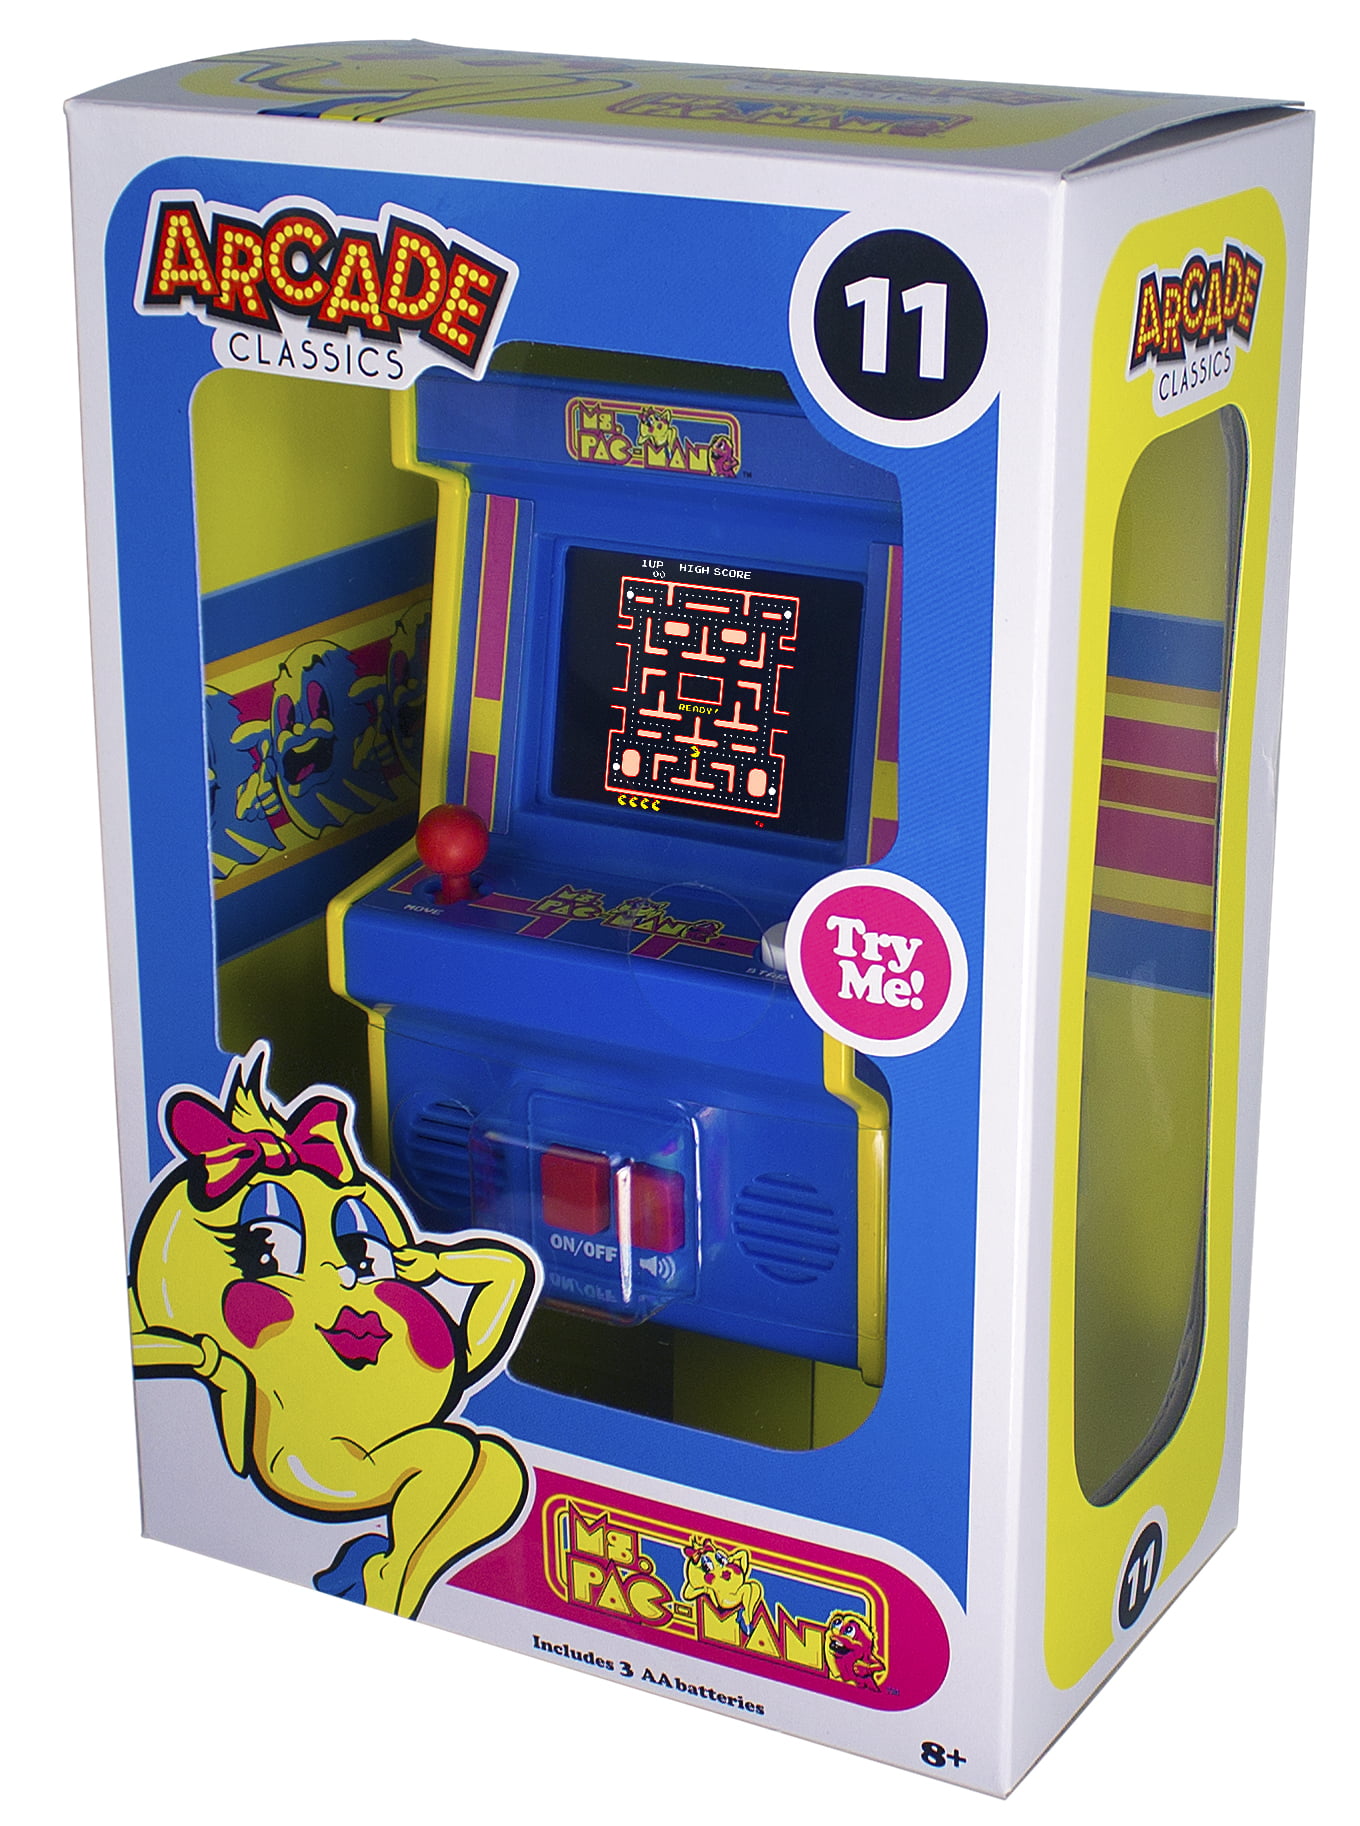 Pac-man Handheld Retro Mini Arcade Game 2018 Basic Fun Bandai Namco for sale online Ms 